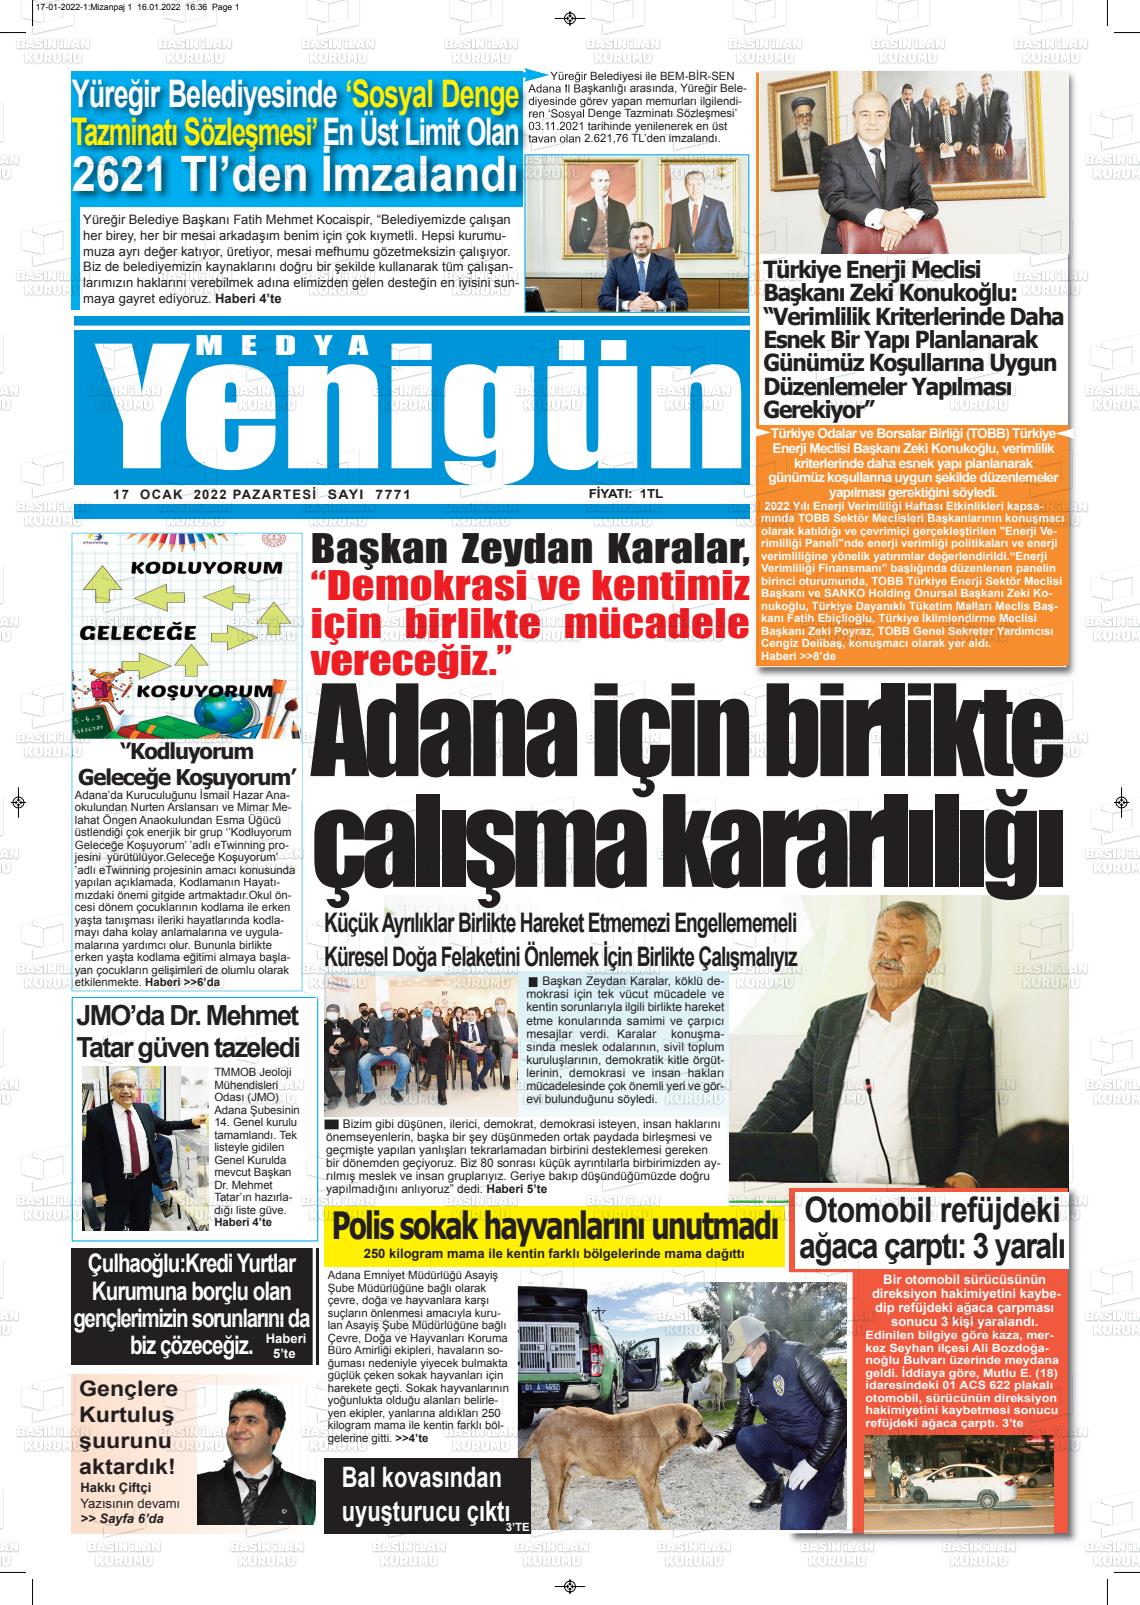 17 Ocak 2022 Medya Yenigün Gazete Manşeti